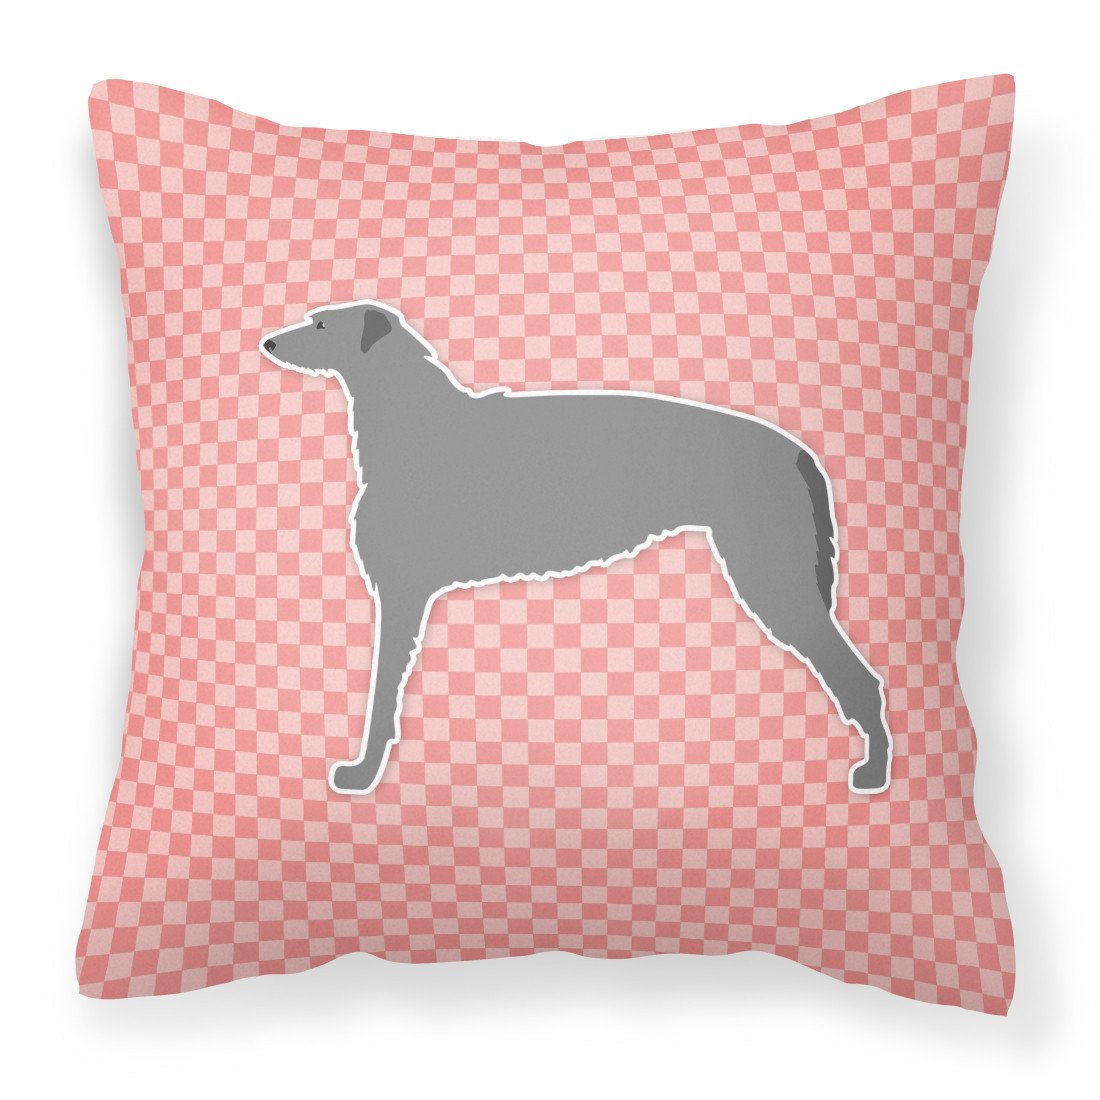 Scottish Deerhound Checkerboard Pink Fabric Decorative Pillow BB3596PW1818 by Caroline's Treasures